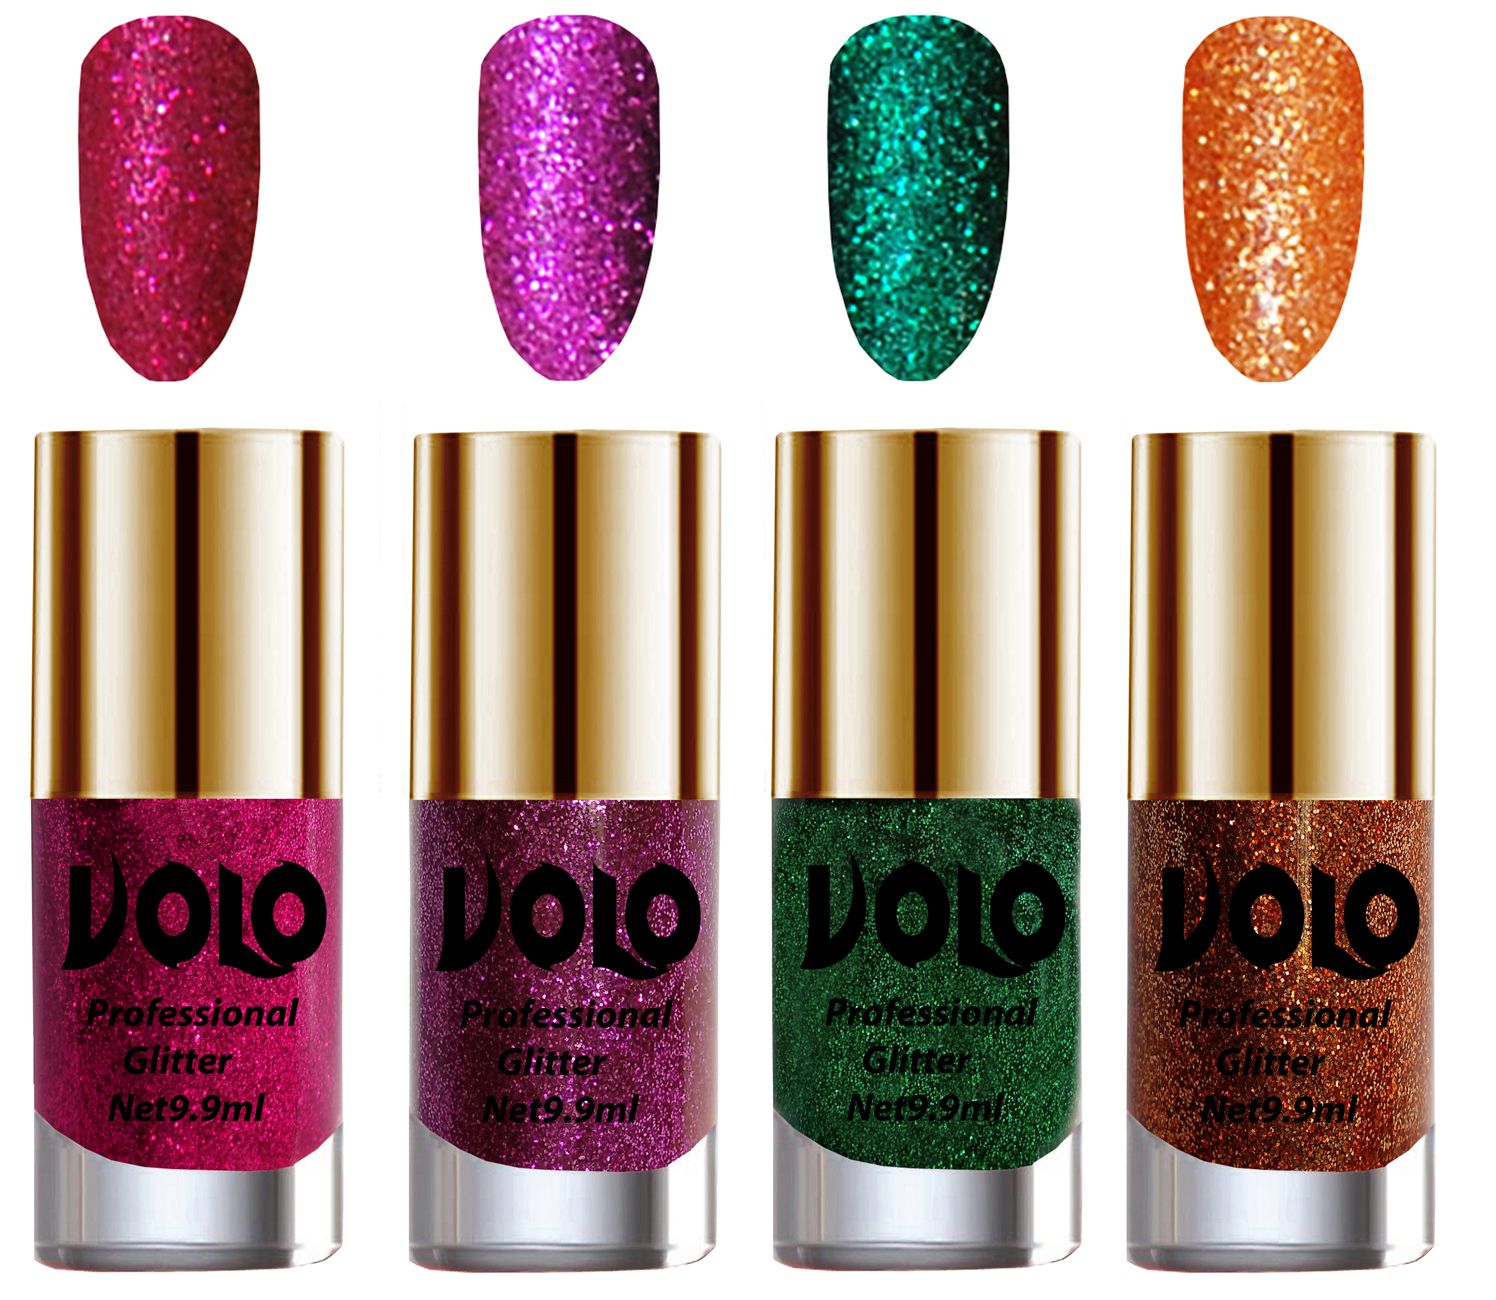     			VOLO Professionally Used Glitter Shine Nail Polish Magenta,Purple,Green Orange Pack of 4 39 mL